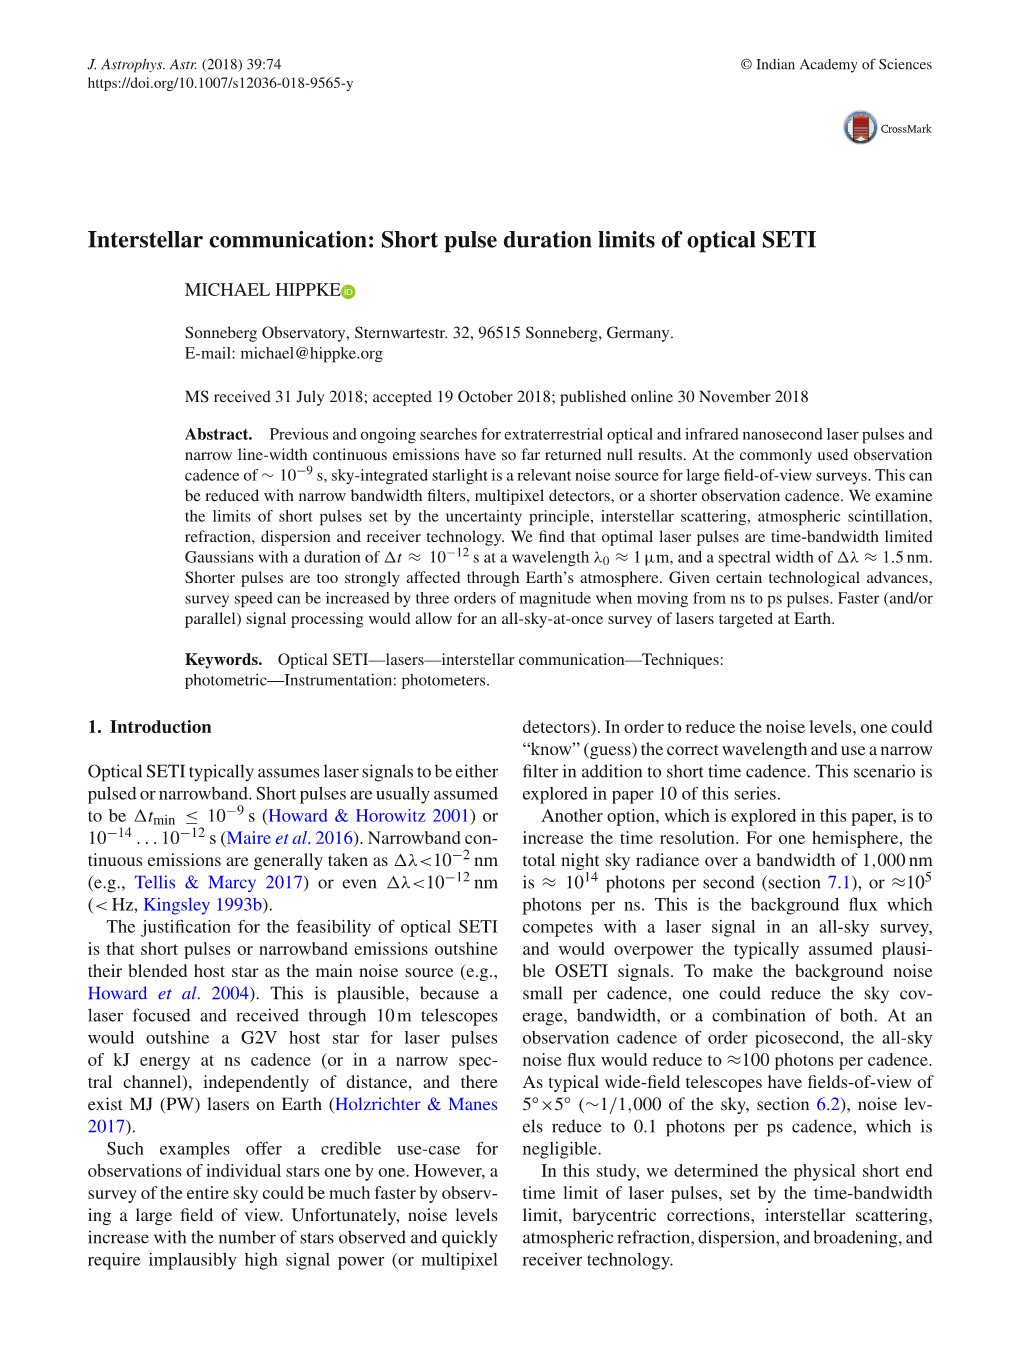 Interstellar Communication: Short Pulse Duration Limits of Optical SETI